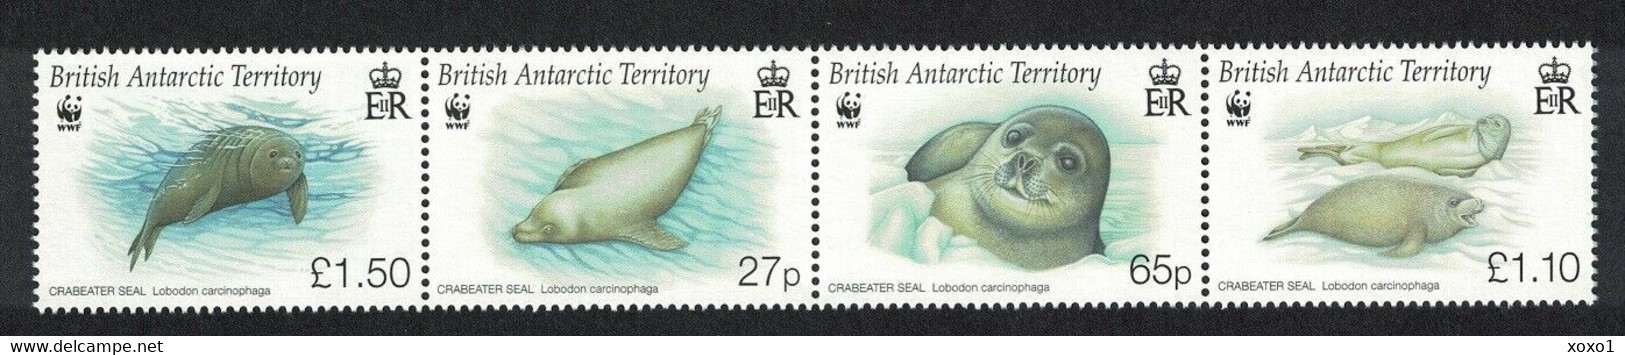 British Antarctic Territory (BAT) 2009 MiNr. 505 - 508 WWF Marine Life Crabeater Seal 4v  MNH**  20.00 € - Ongebruikt